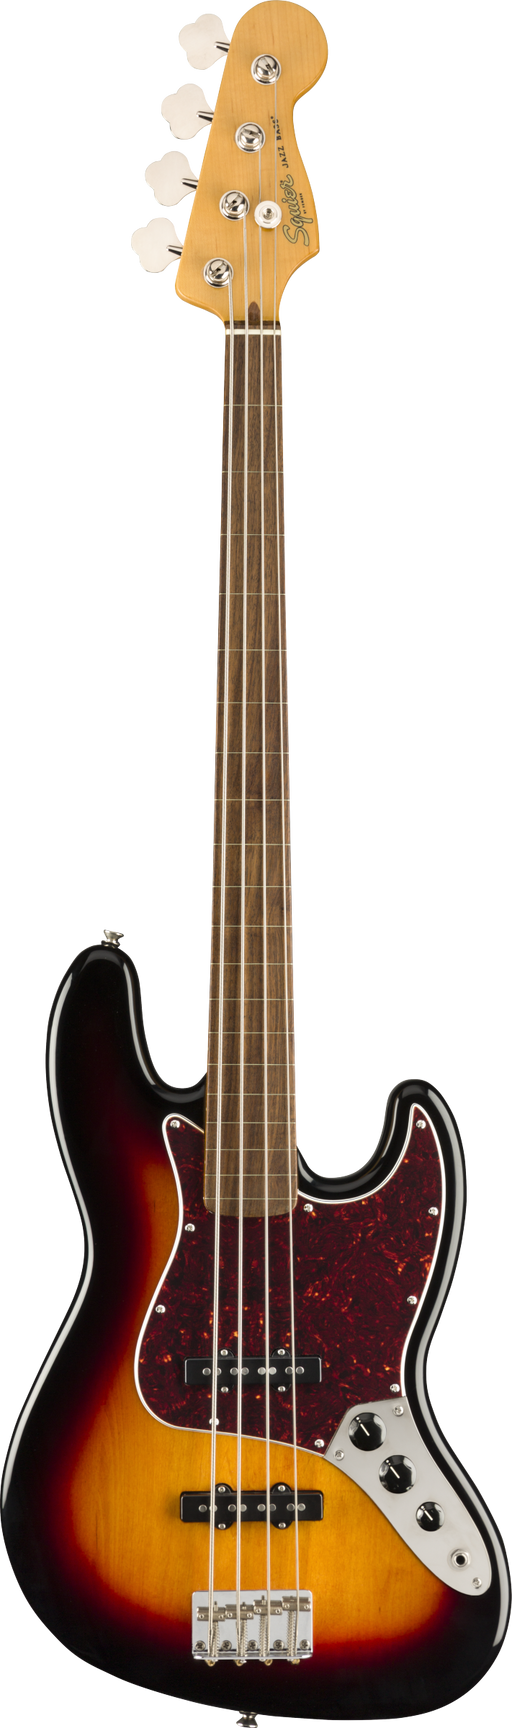 Squier Classic Vibe '60s Jazz Bass Fretless Laurel Fingerboard 3-Color Sunburst